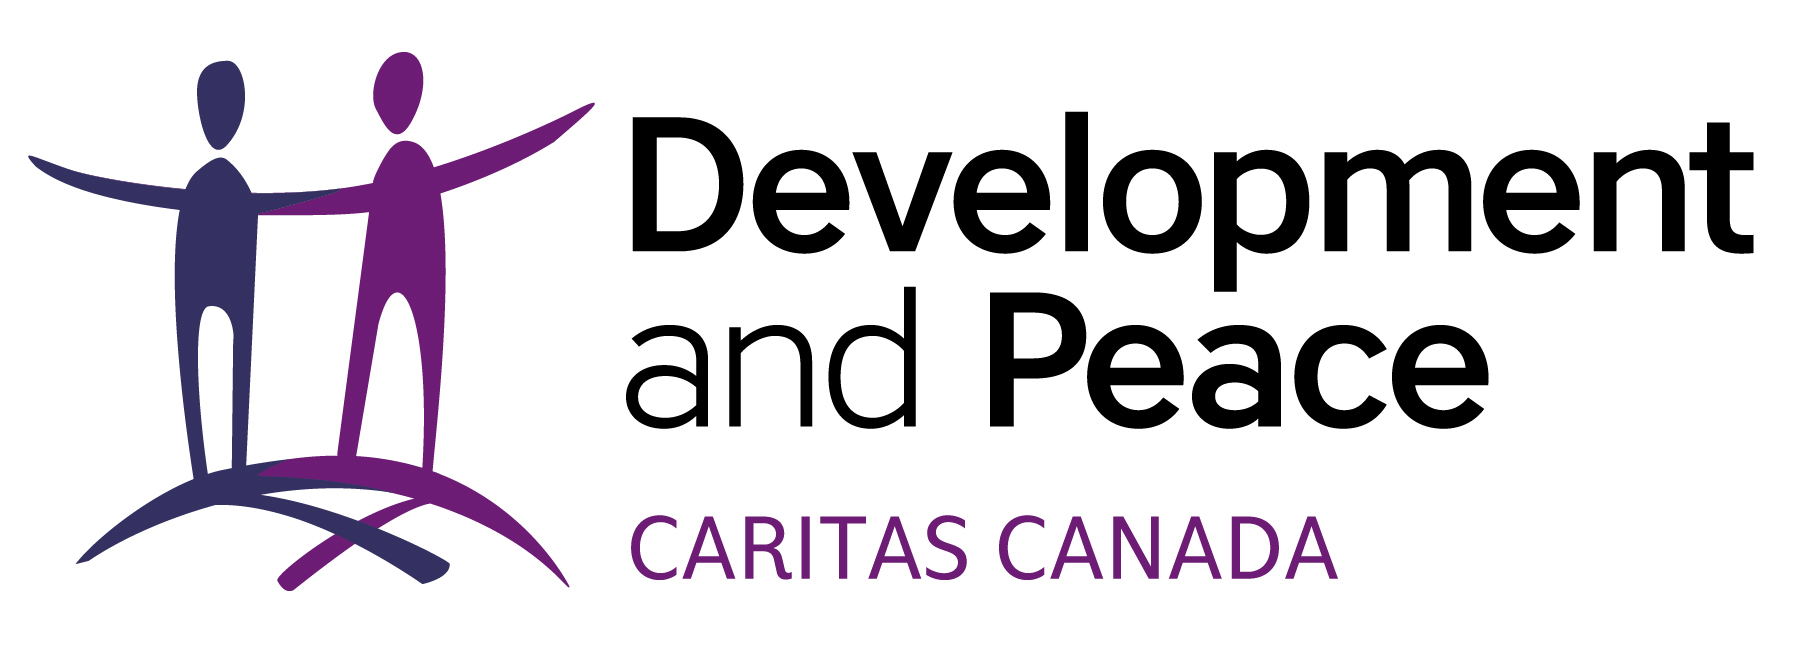 Development and peace.jpg (208 KB)